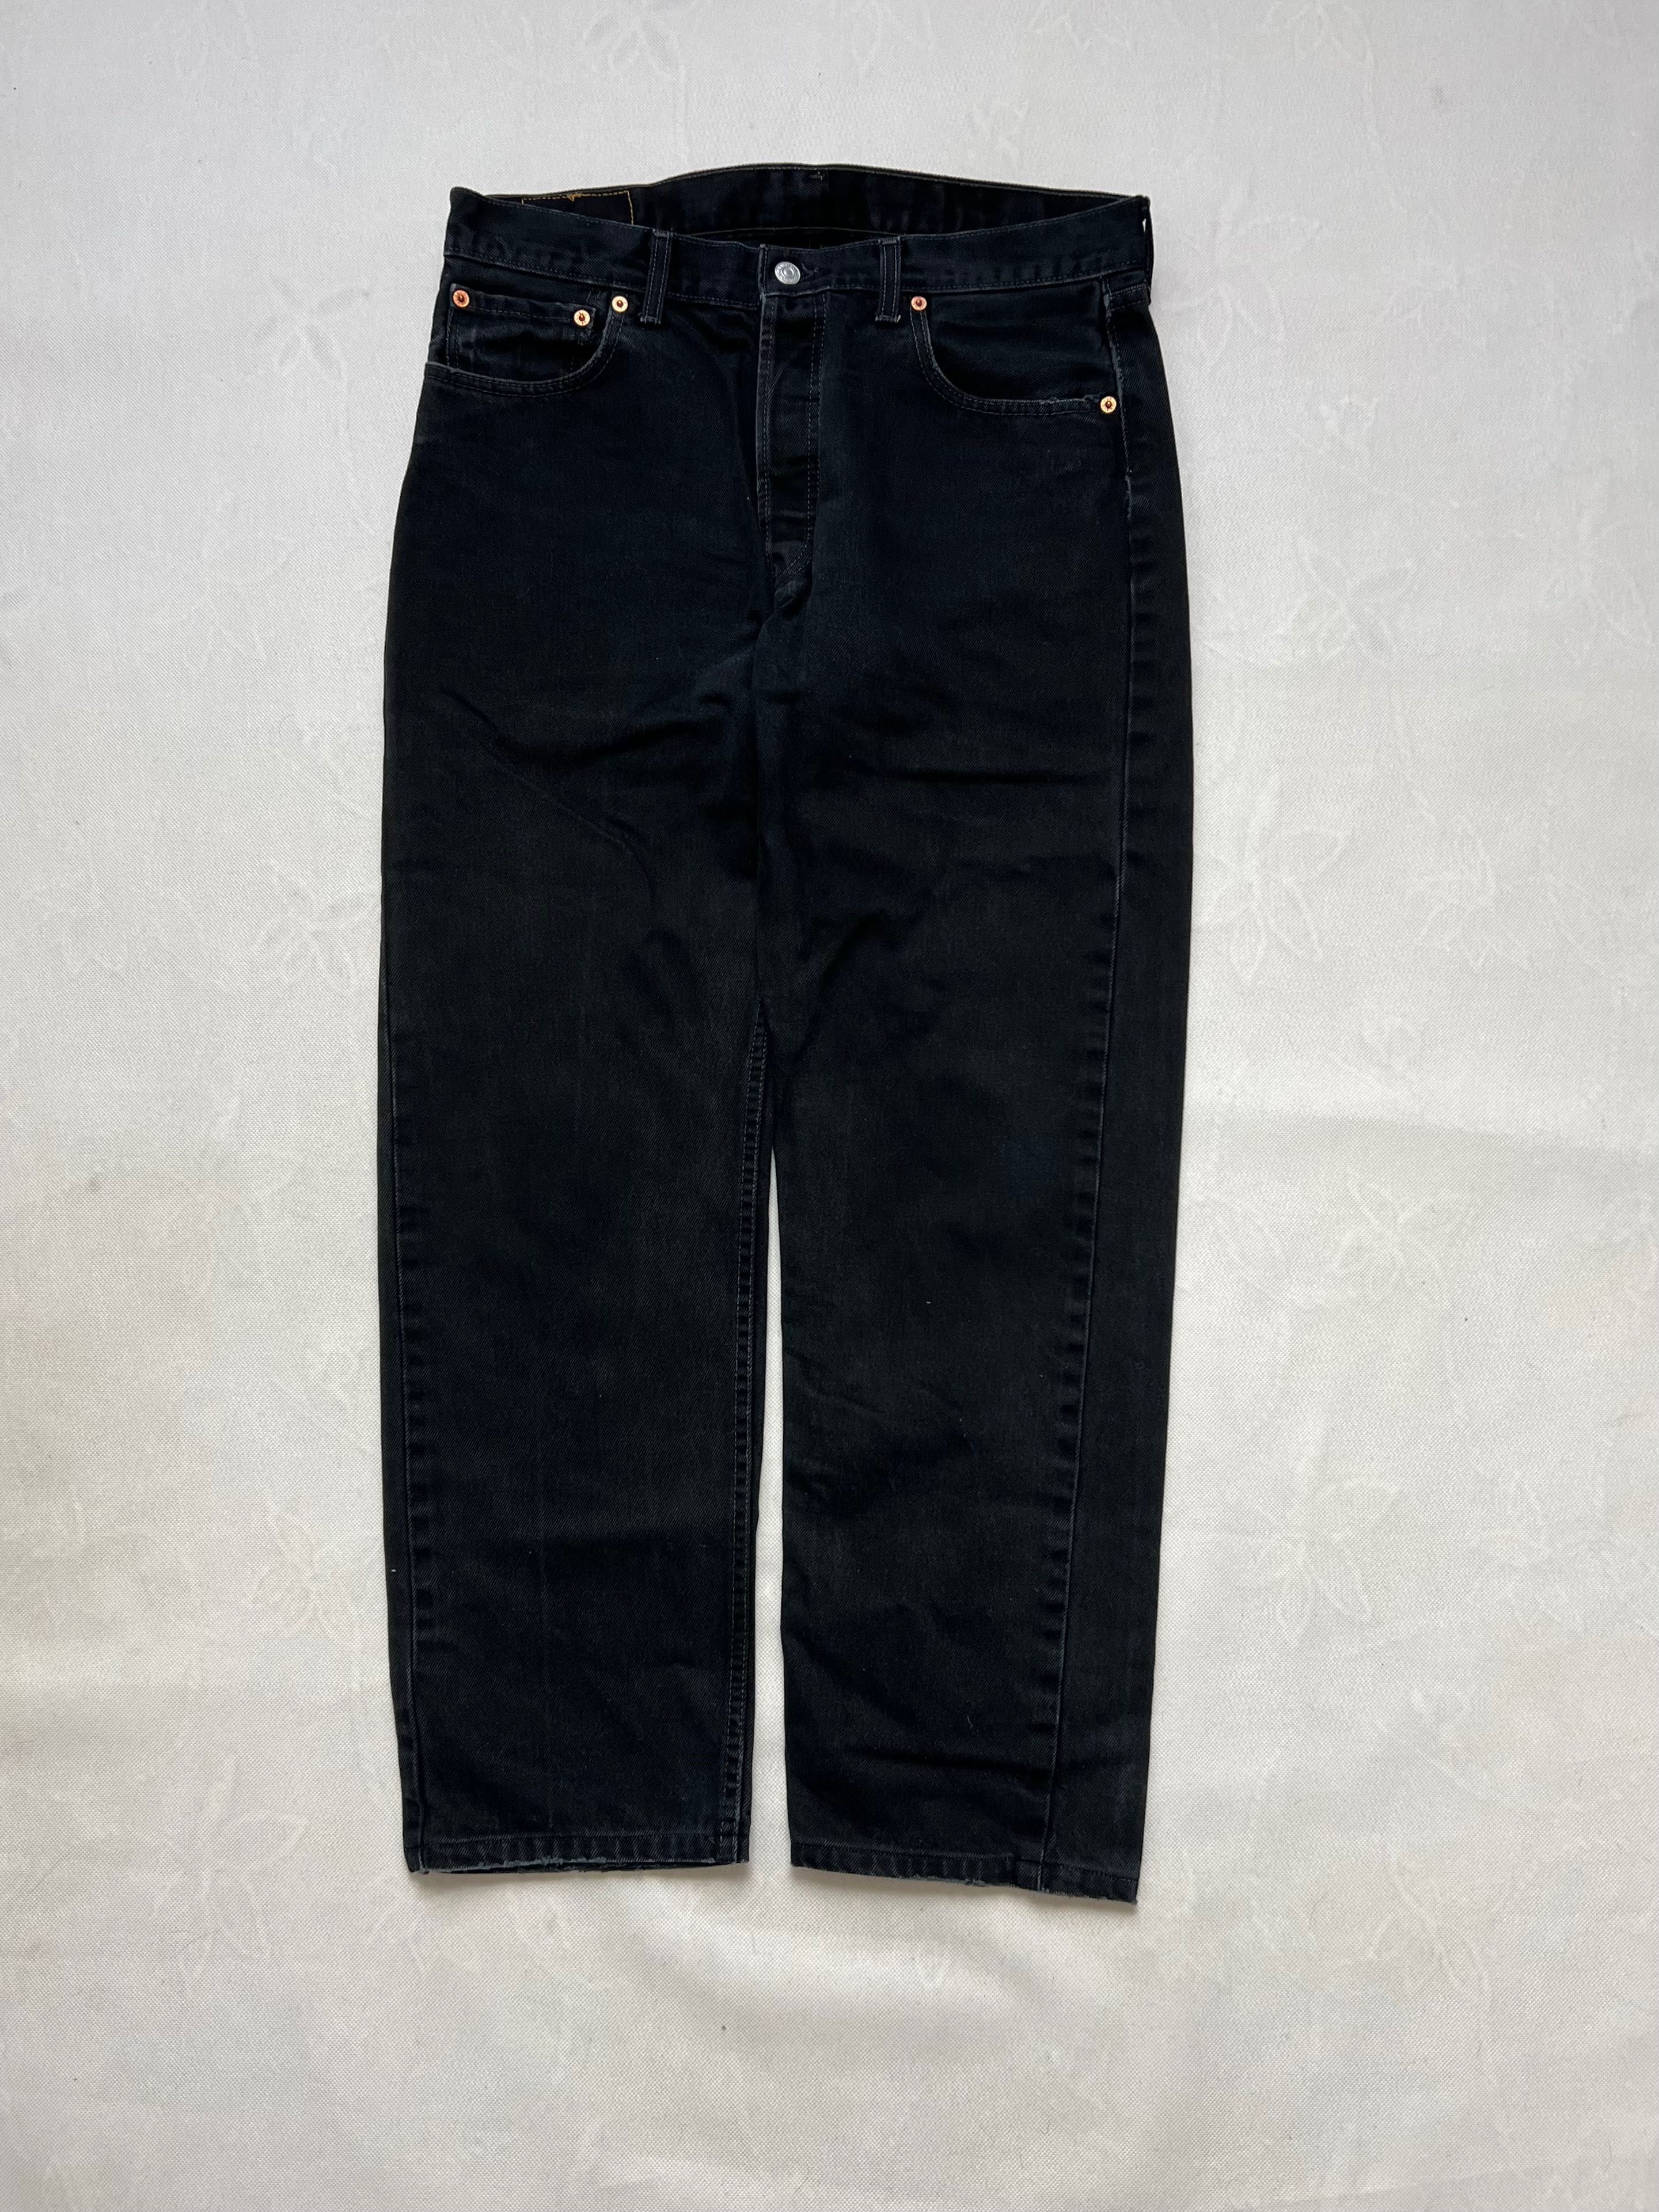 Spodnie Levi’s 517 black vintage 90’s red tab pants